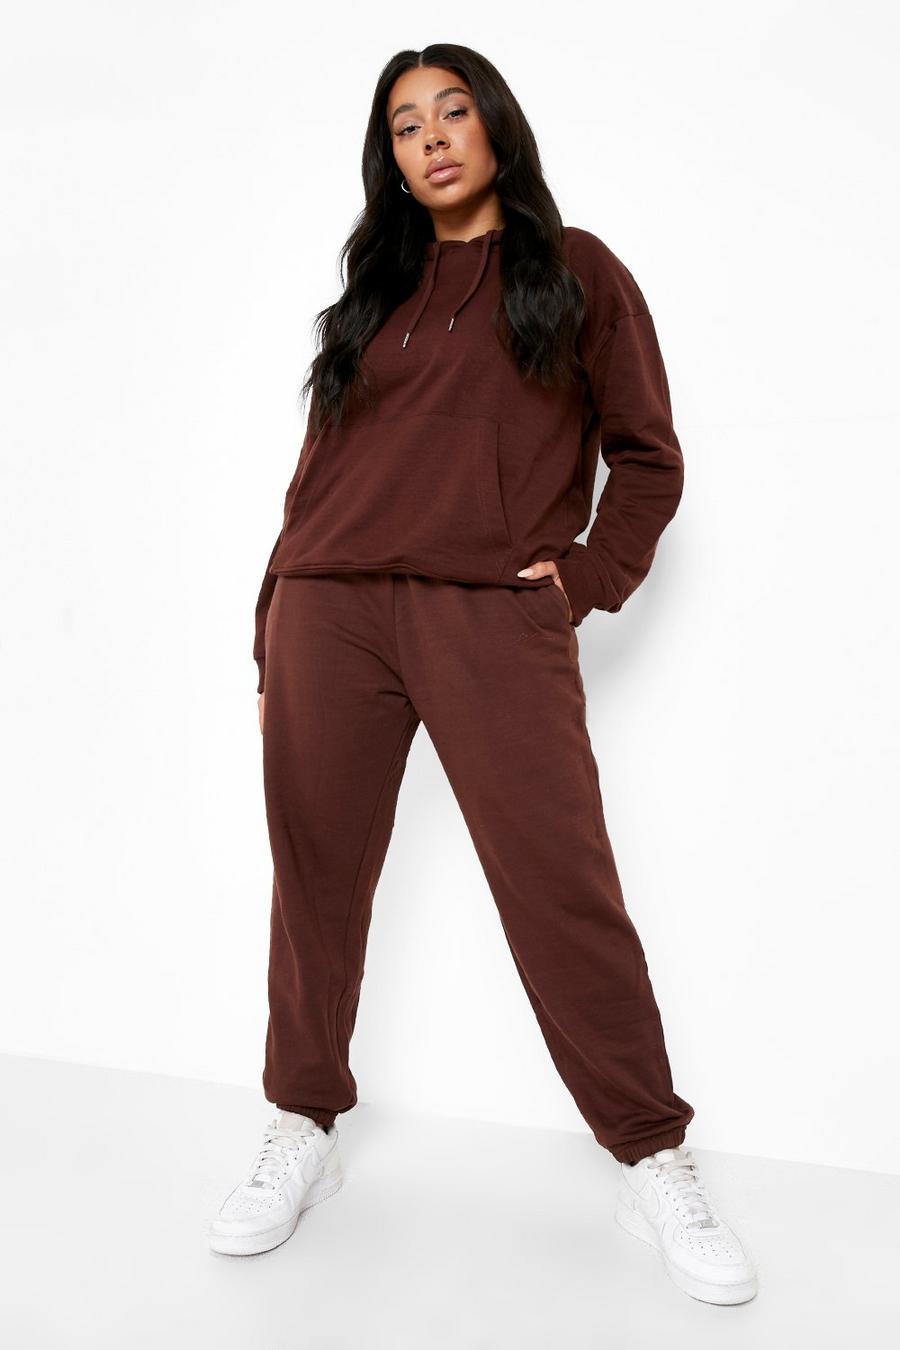 Pantaloni tuta Plus Size oversize Woman con ricami, Chocolate image number 1